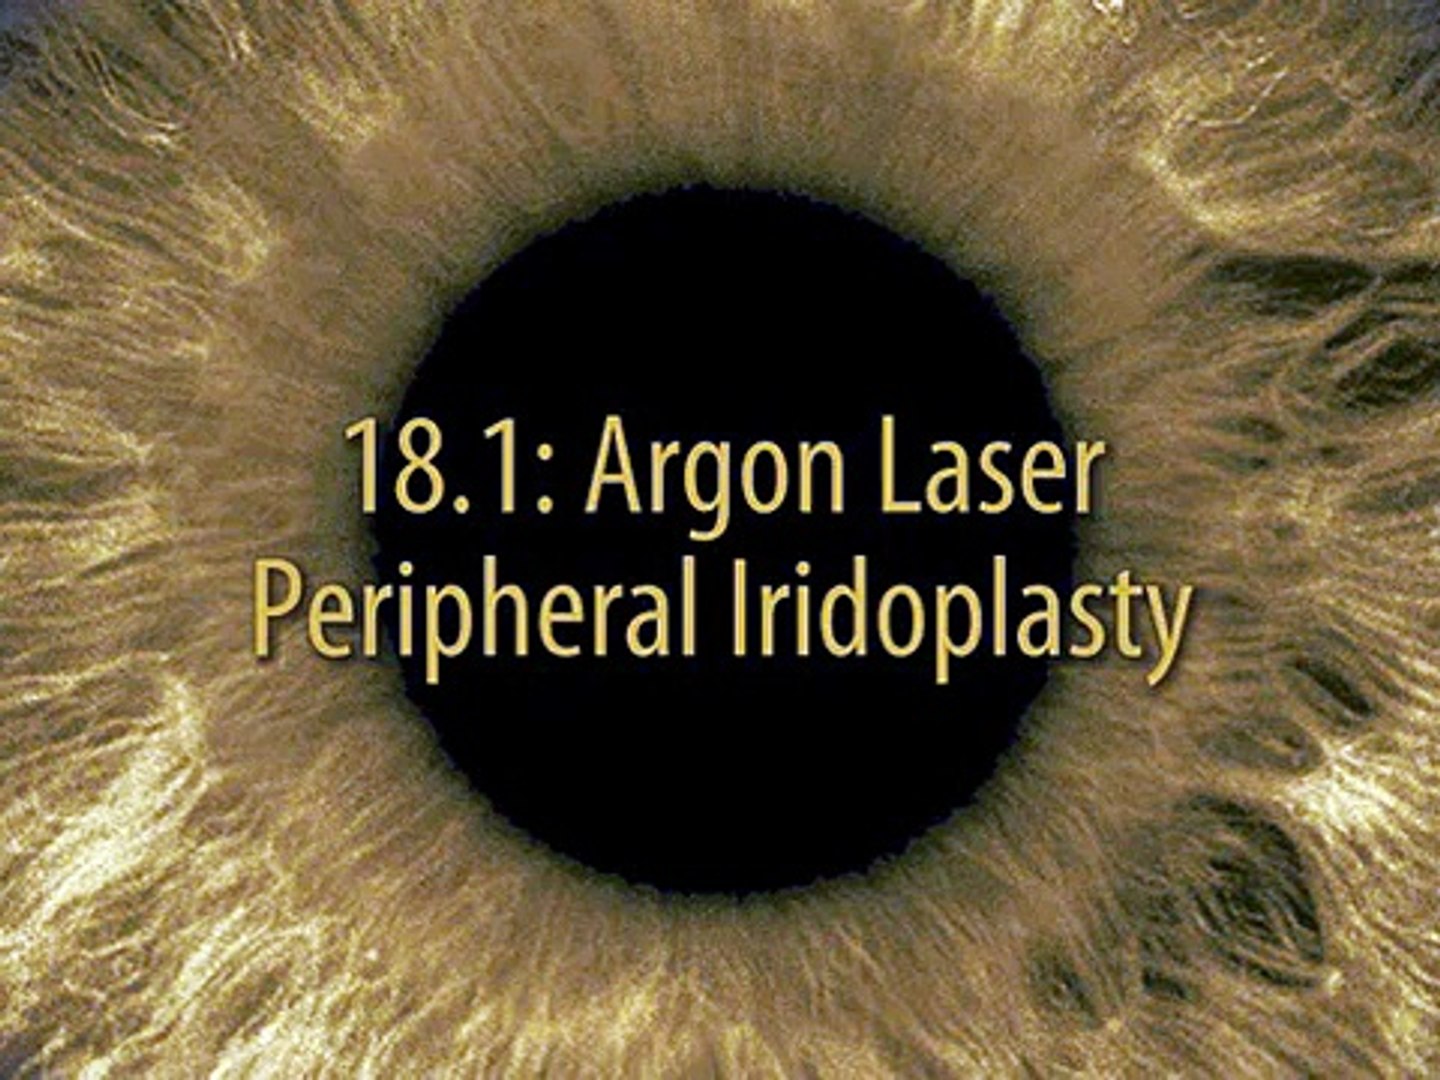 Argon laser peripheral iridoplasty - video Dailymotion